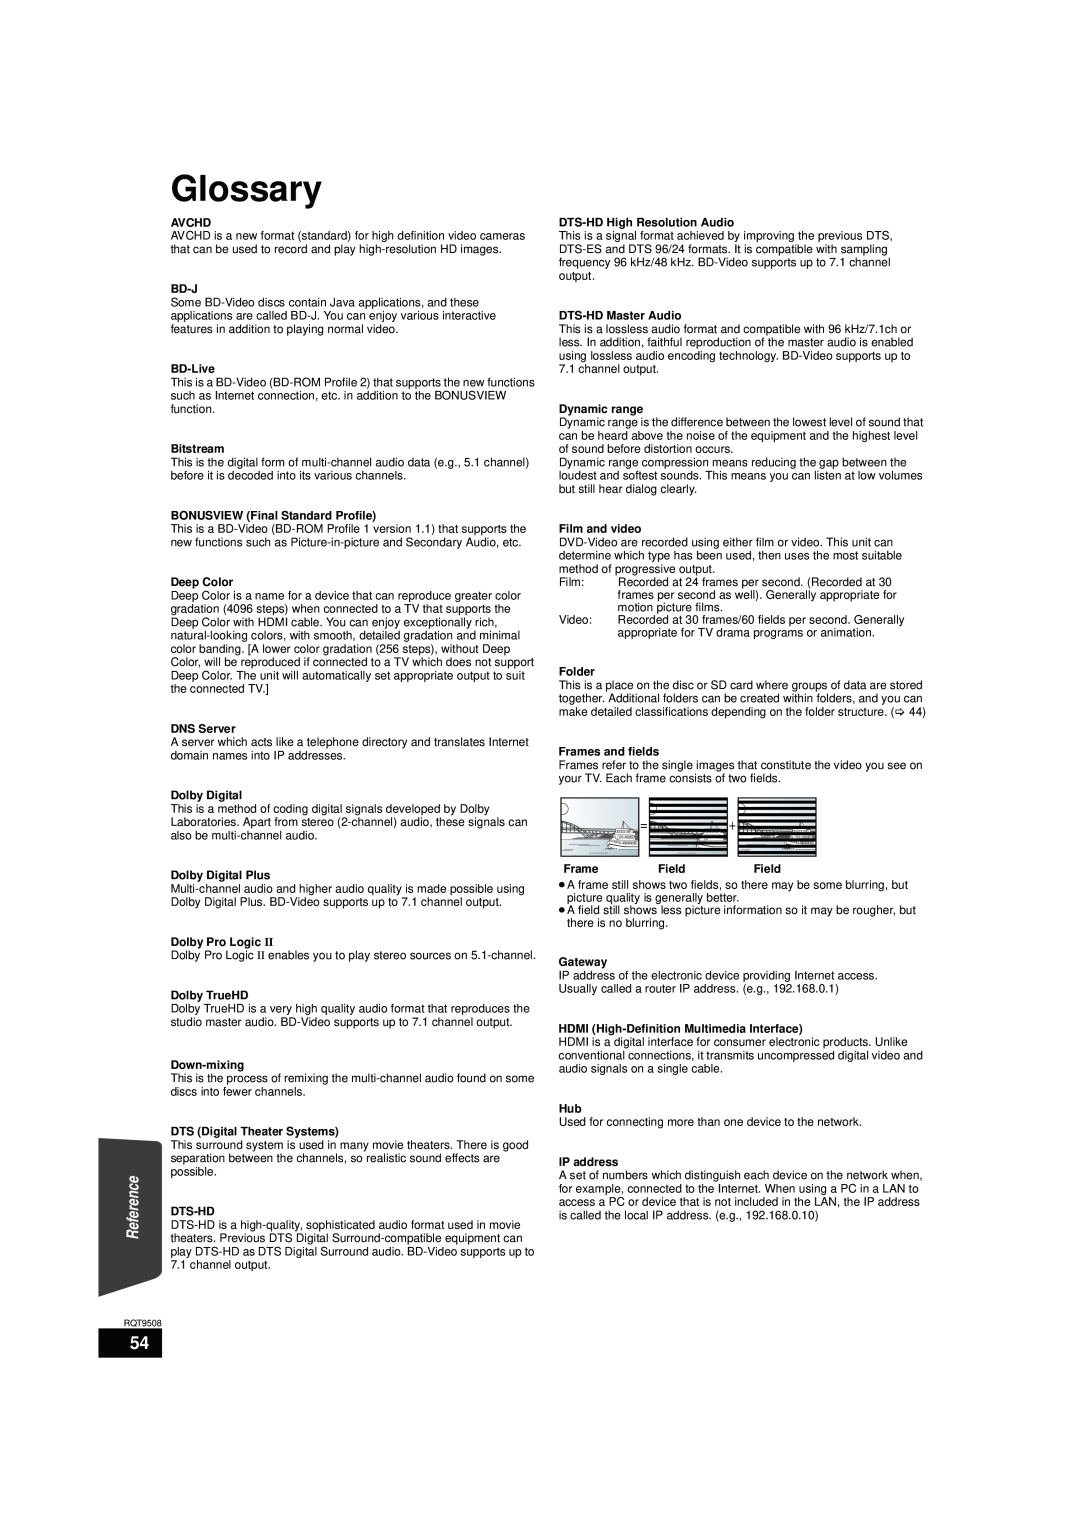 Panasonic SC-BT200, SC-BT303, SC-BT203 warranty Glossary, Field 